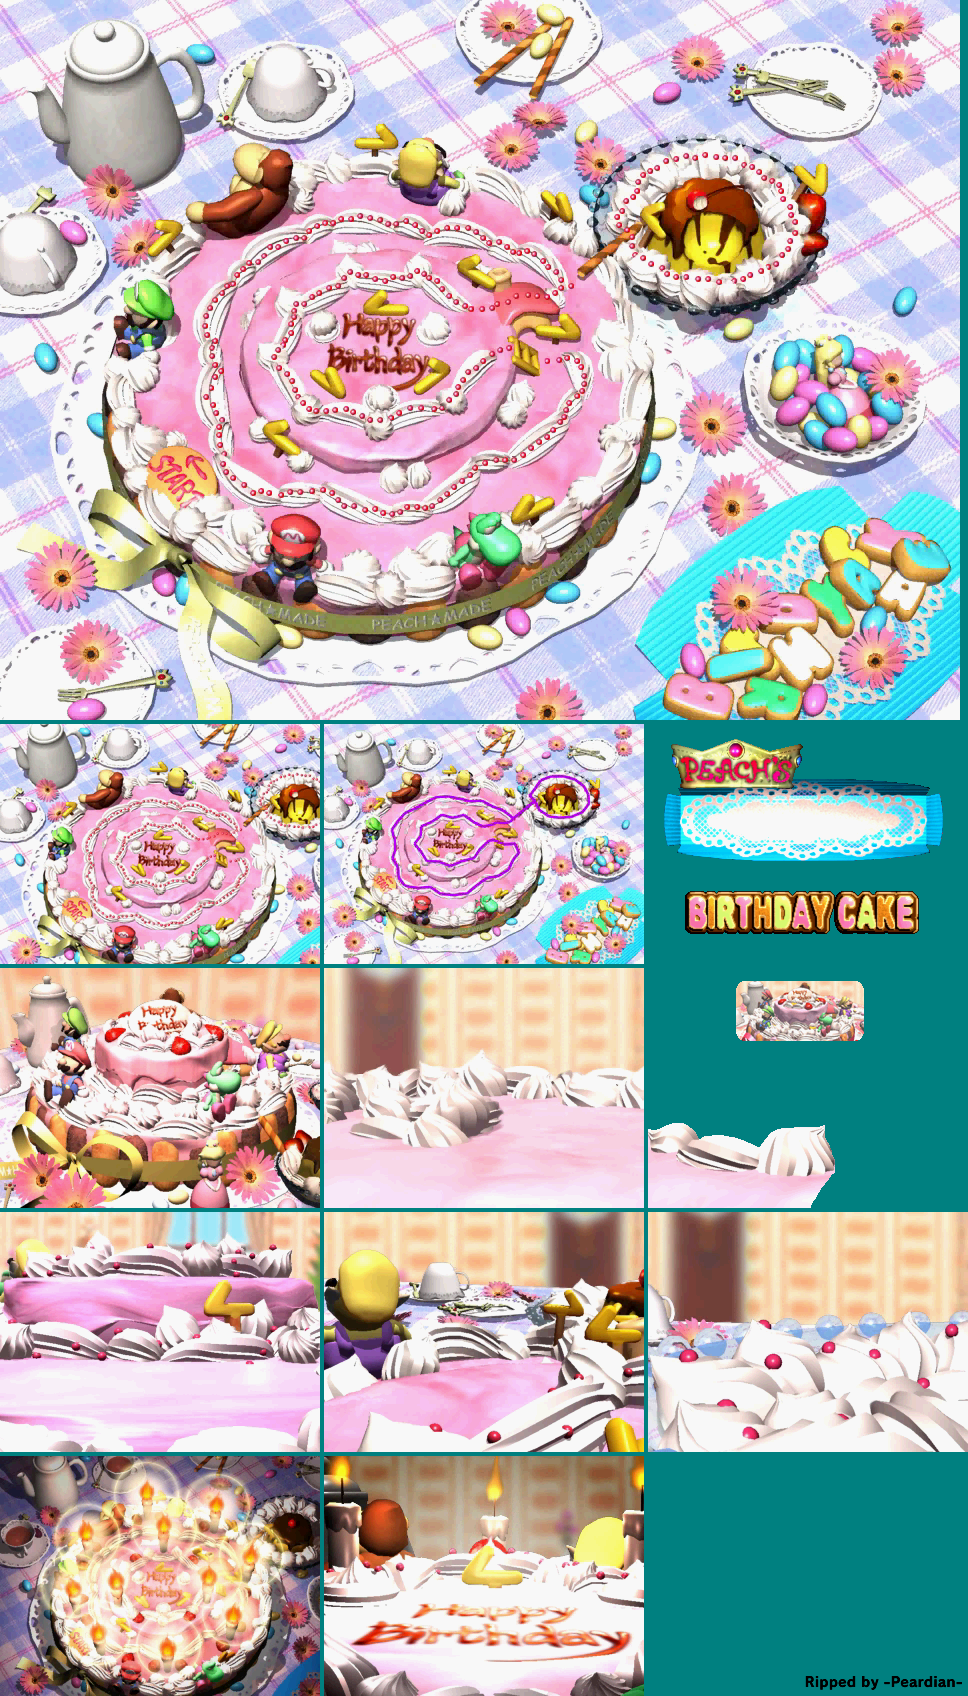 Mario Party - Peach's Birthday Cake